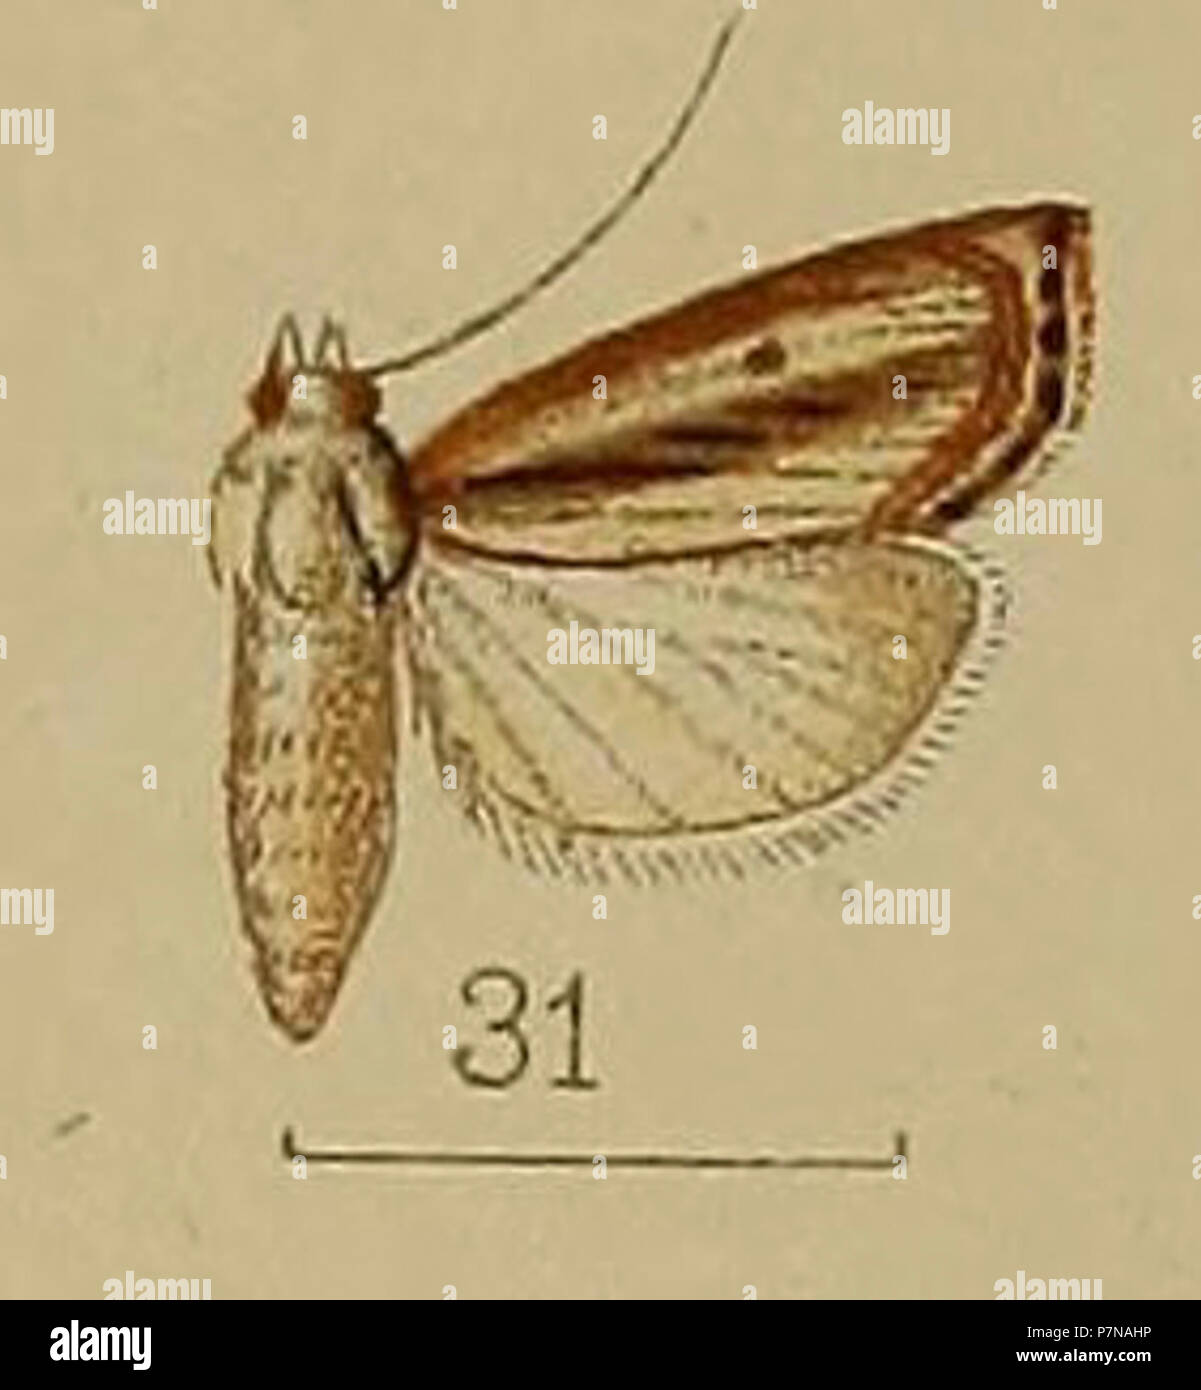 31-Crambus neurigrammalis=Calamotropha neurigrammalis (Hampson 1912). Stock Photo